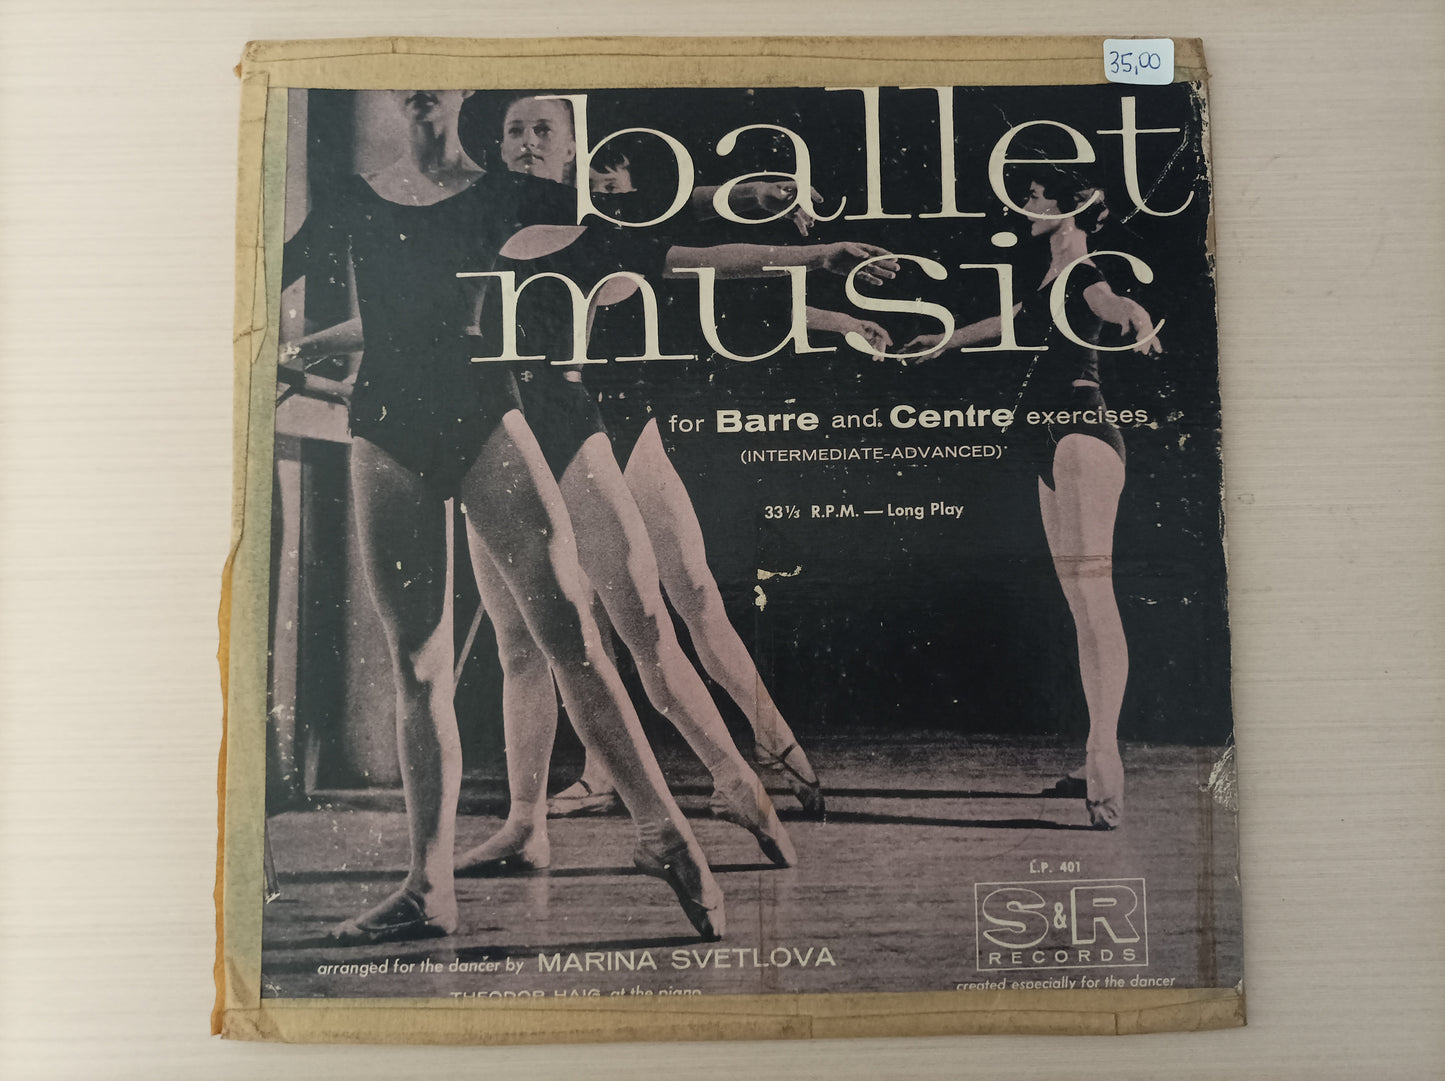 Lp Vinil Ballet Music For barre and centre exercises 10"